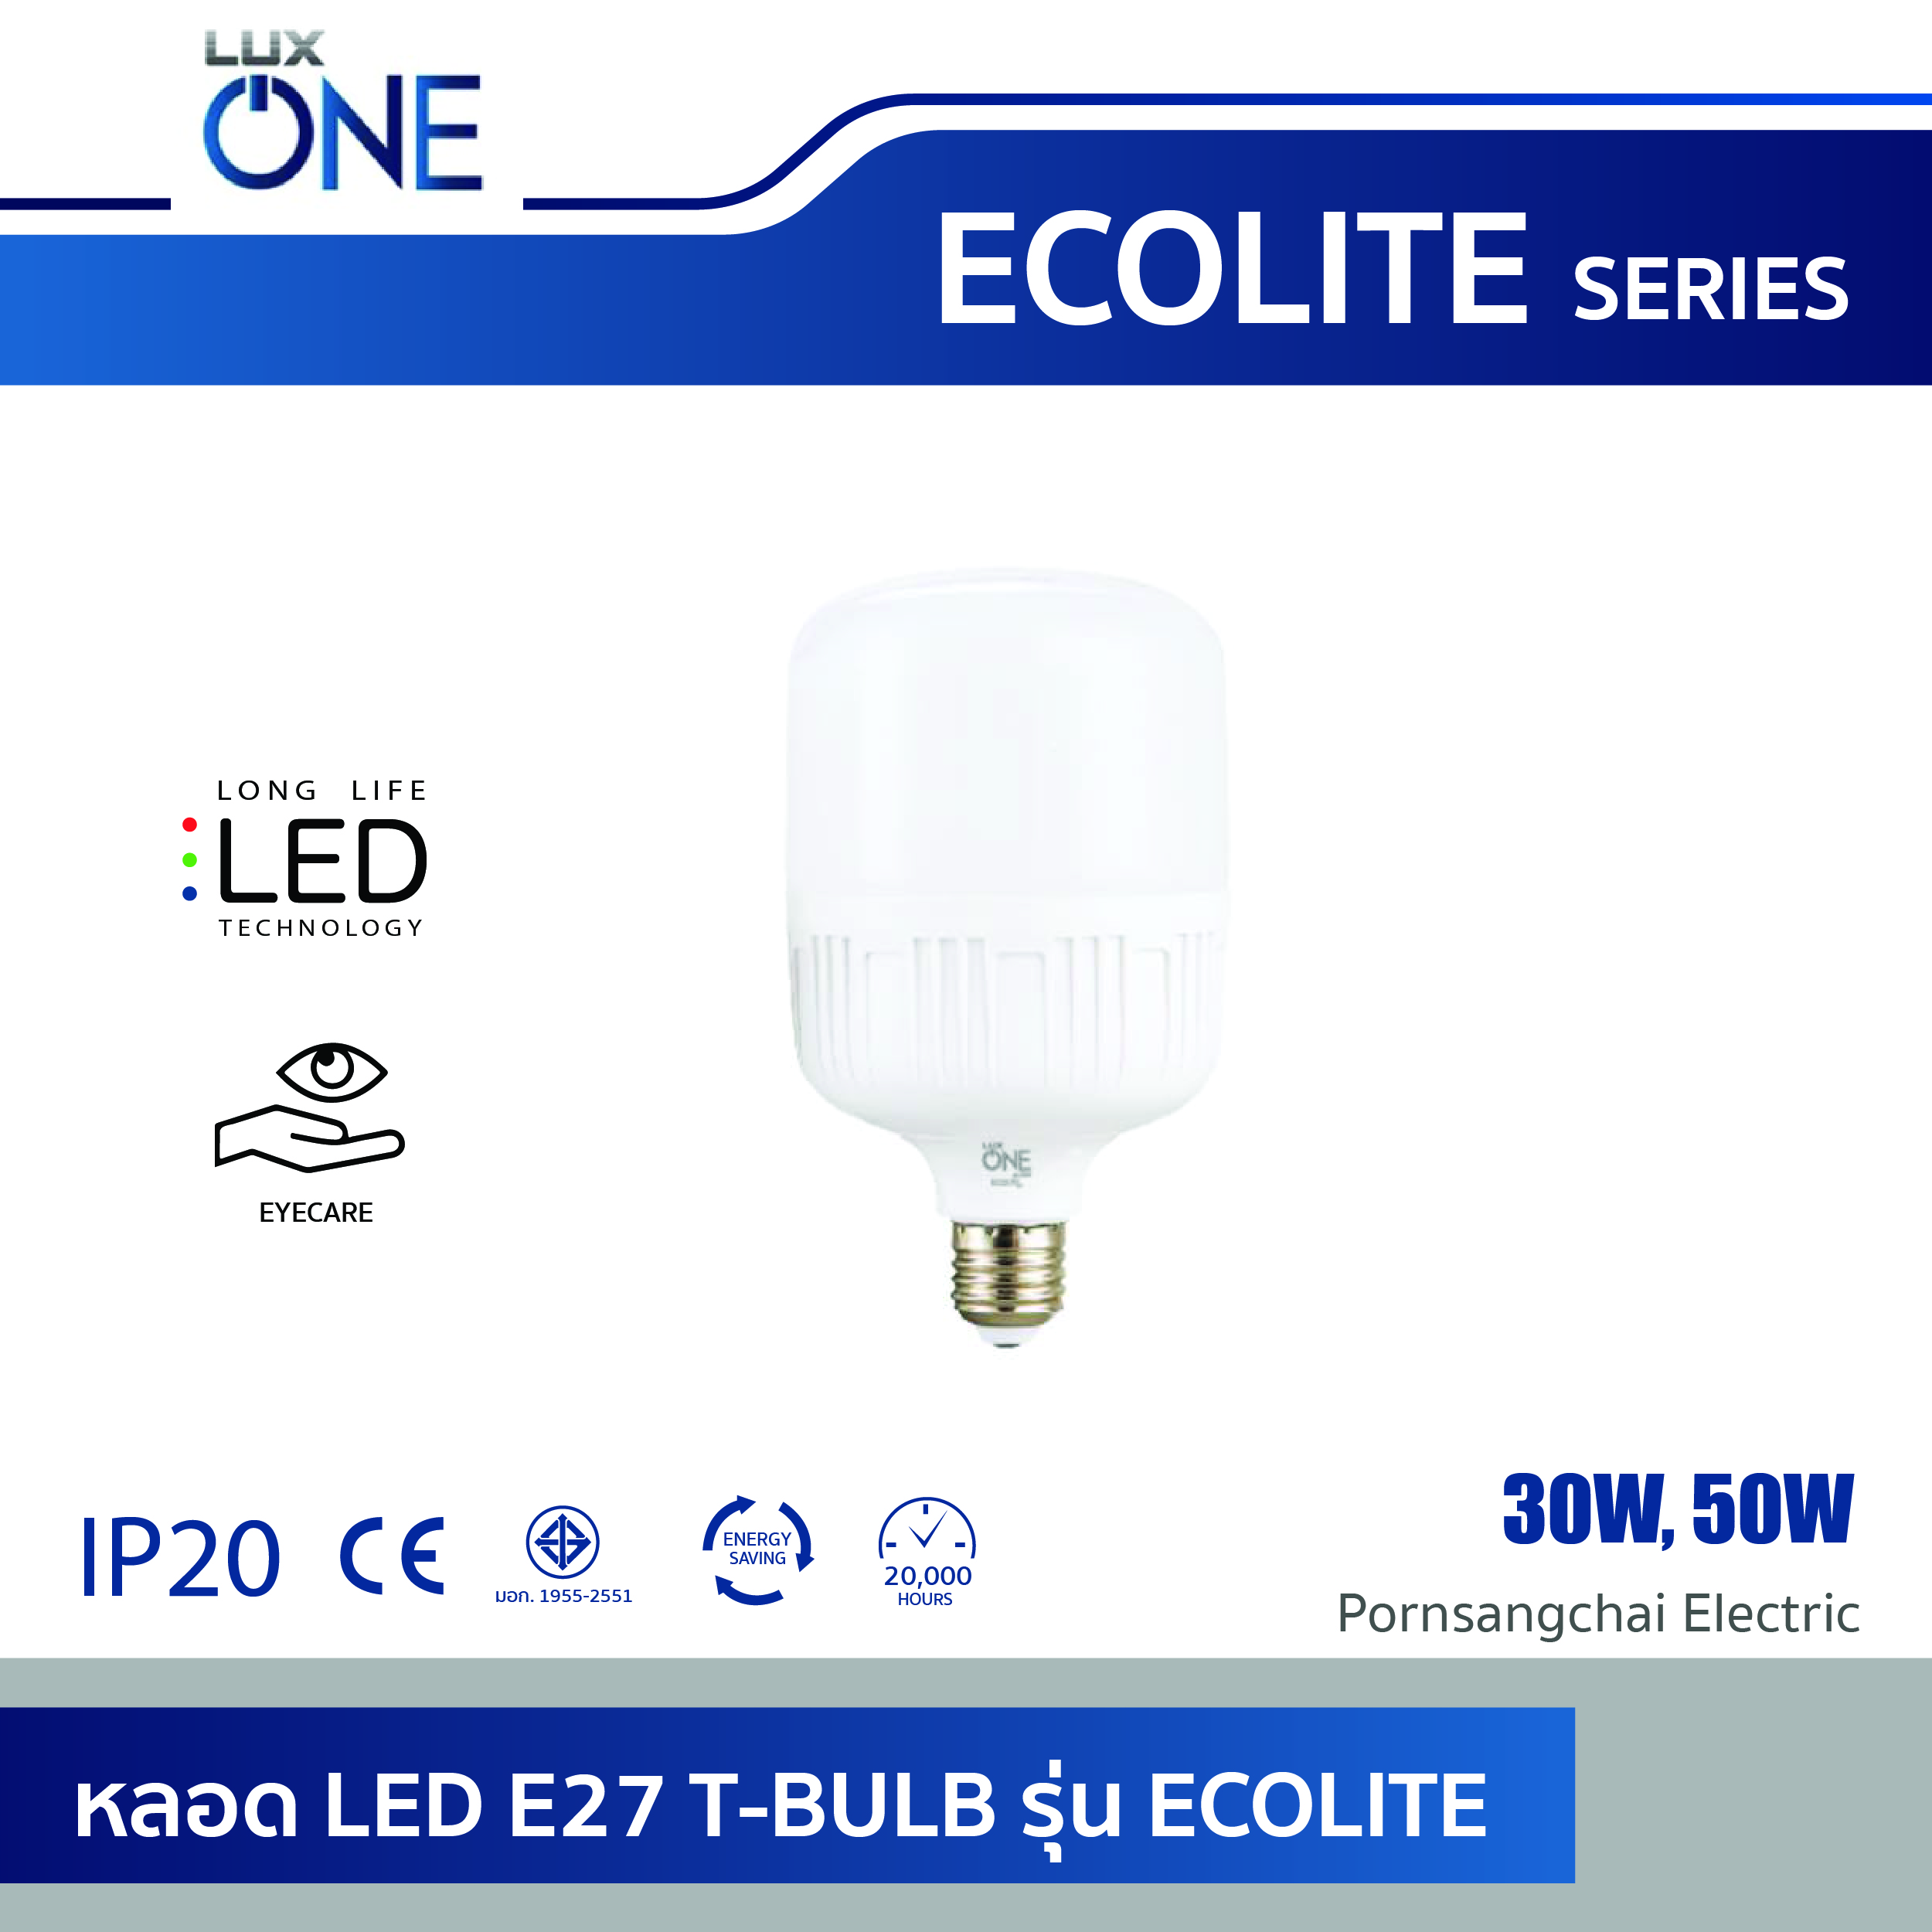 LUXONE LED E27 T-BULB ECOLITE